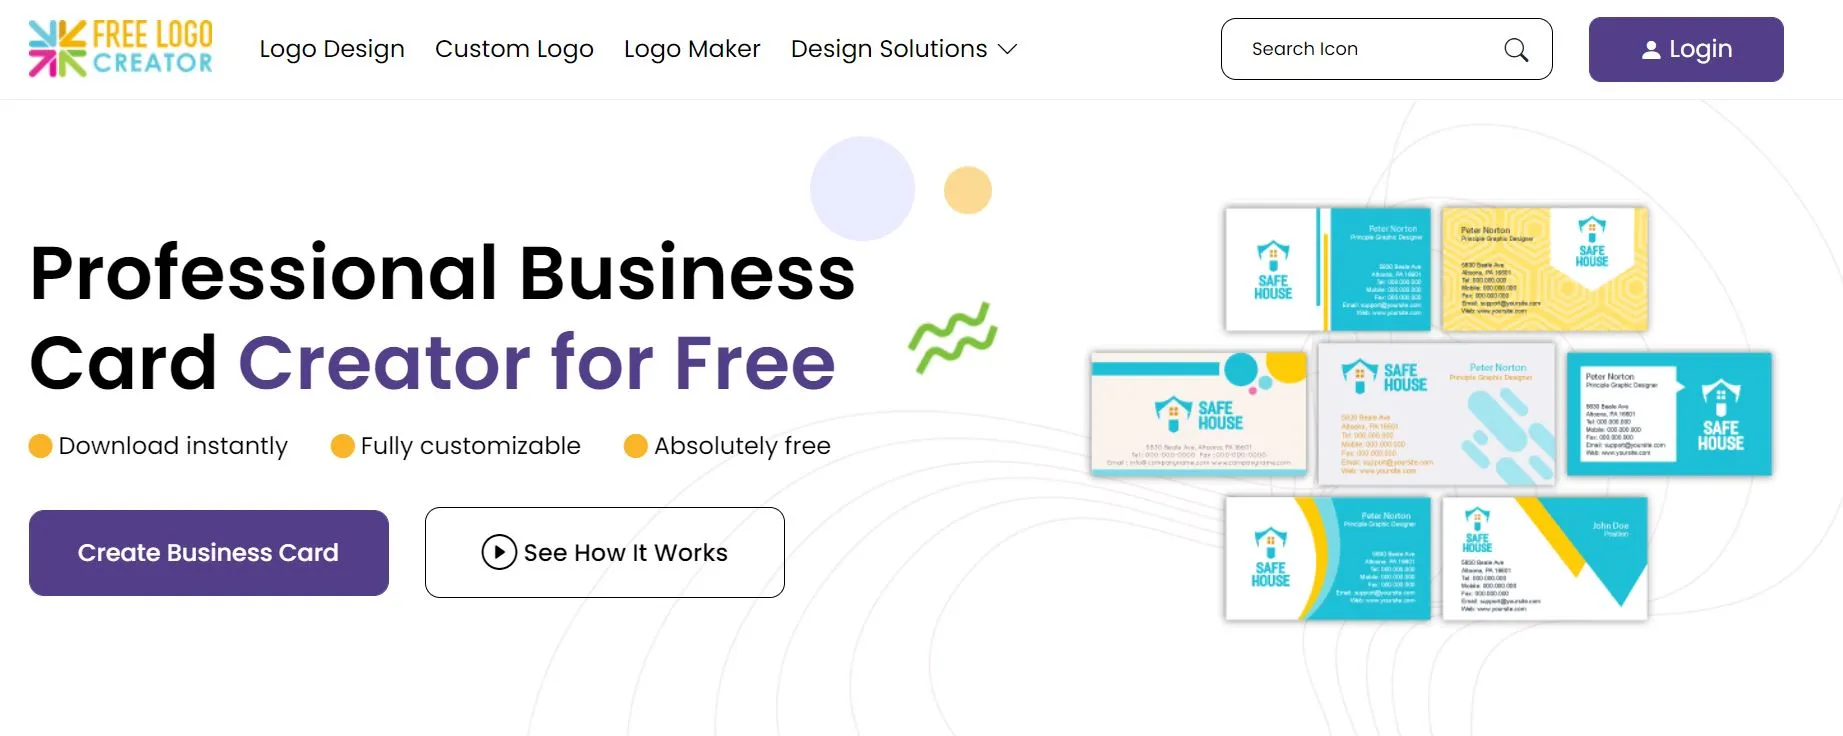 Free logo creator homepage